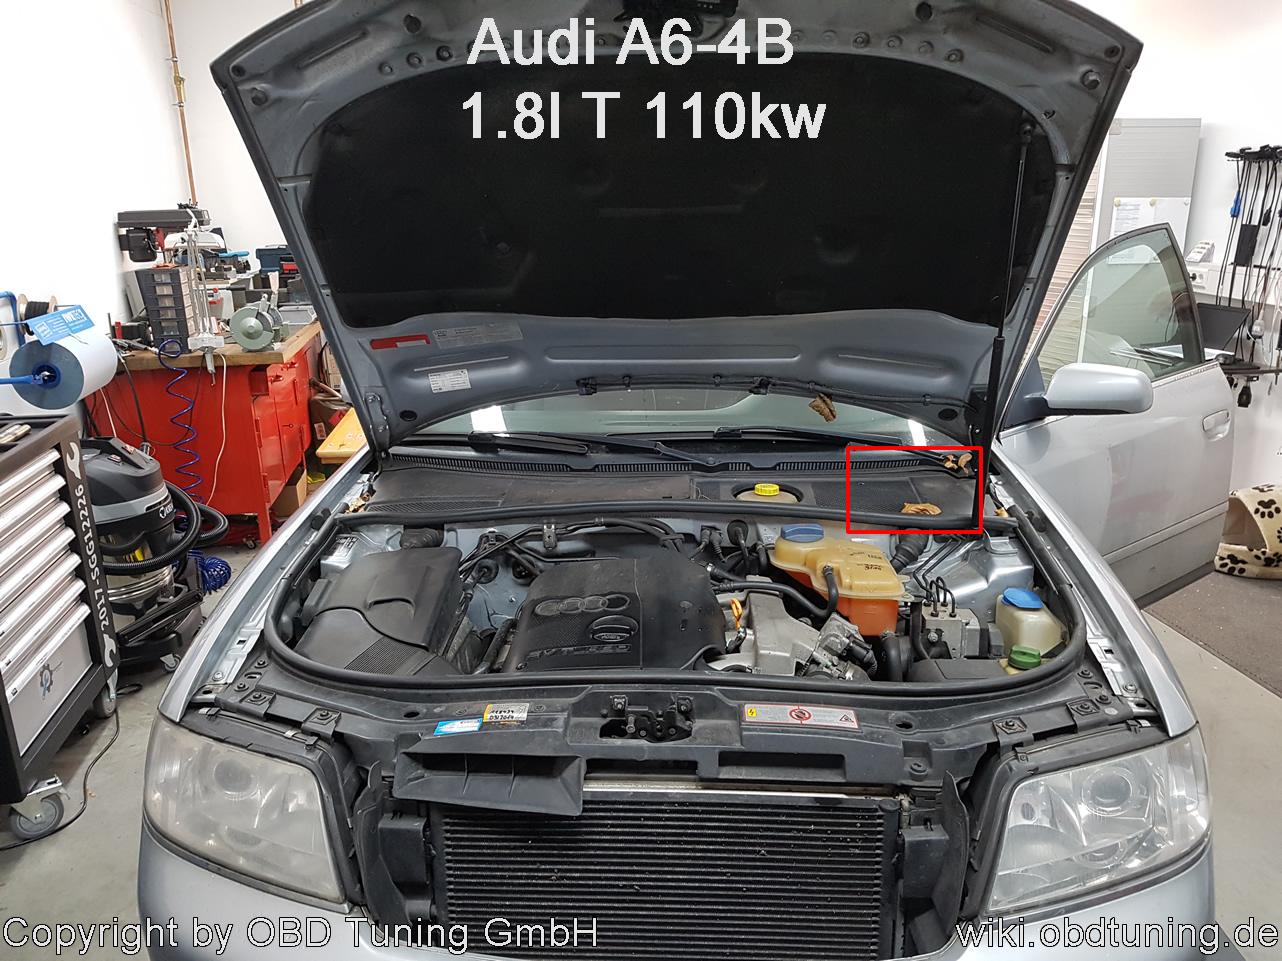 Audi A6 4B ECU.JPG